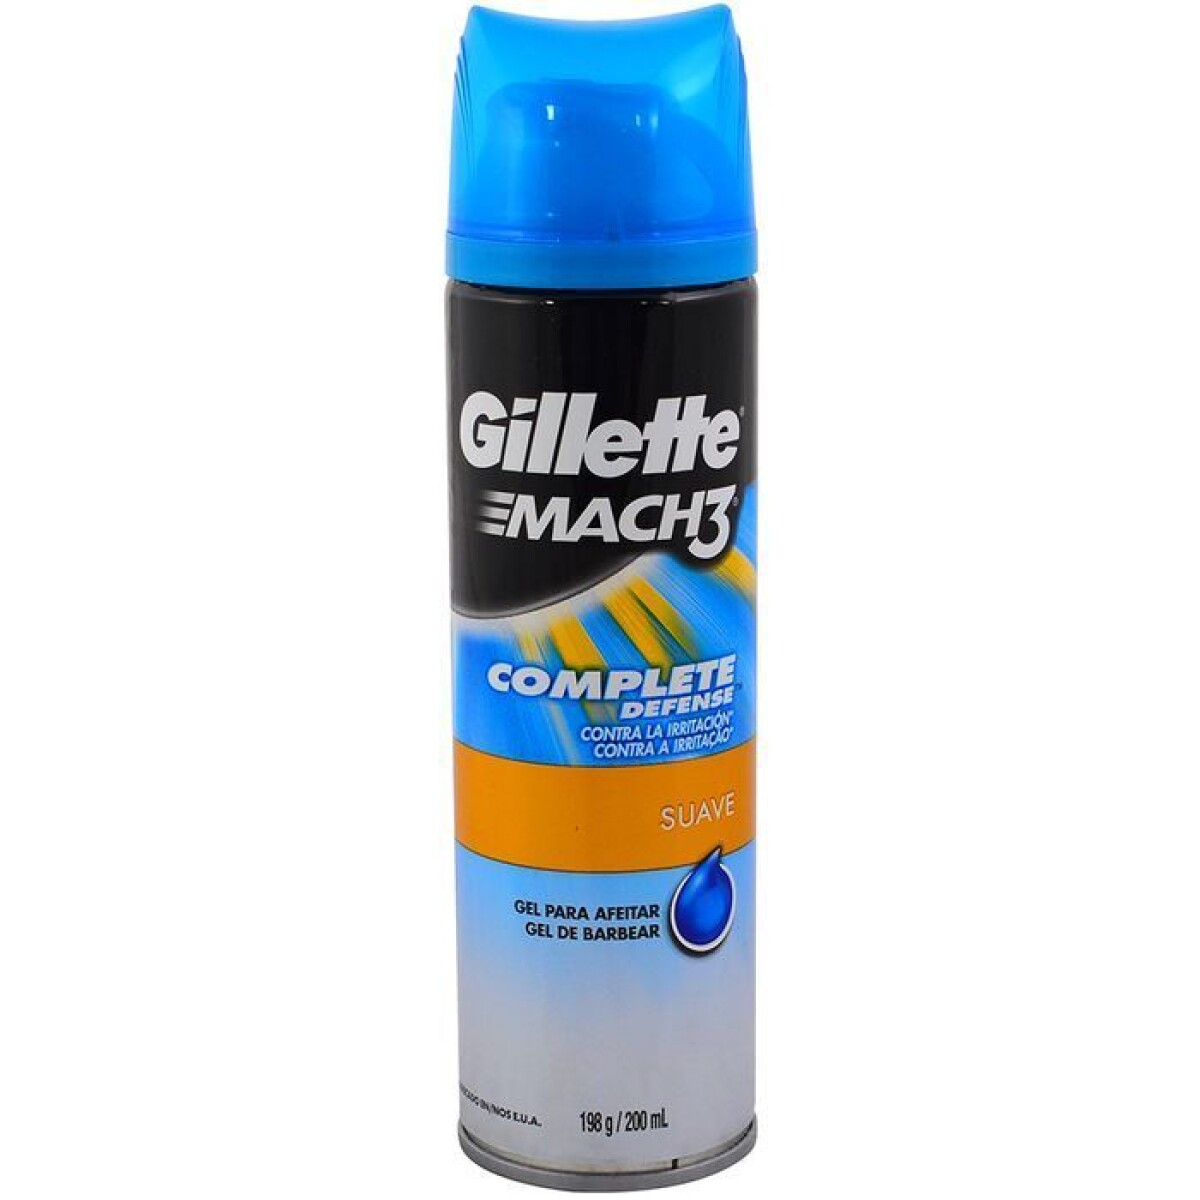 GILLETTE MACH 3 GEL COMPLETE DEFENSE SUAVE 200 ml 